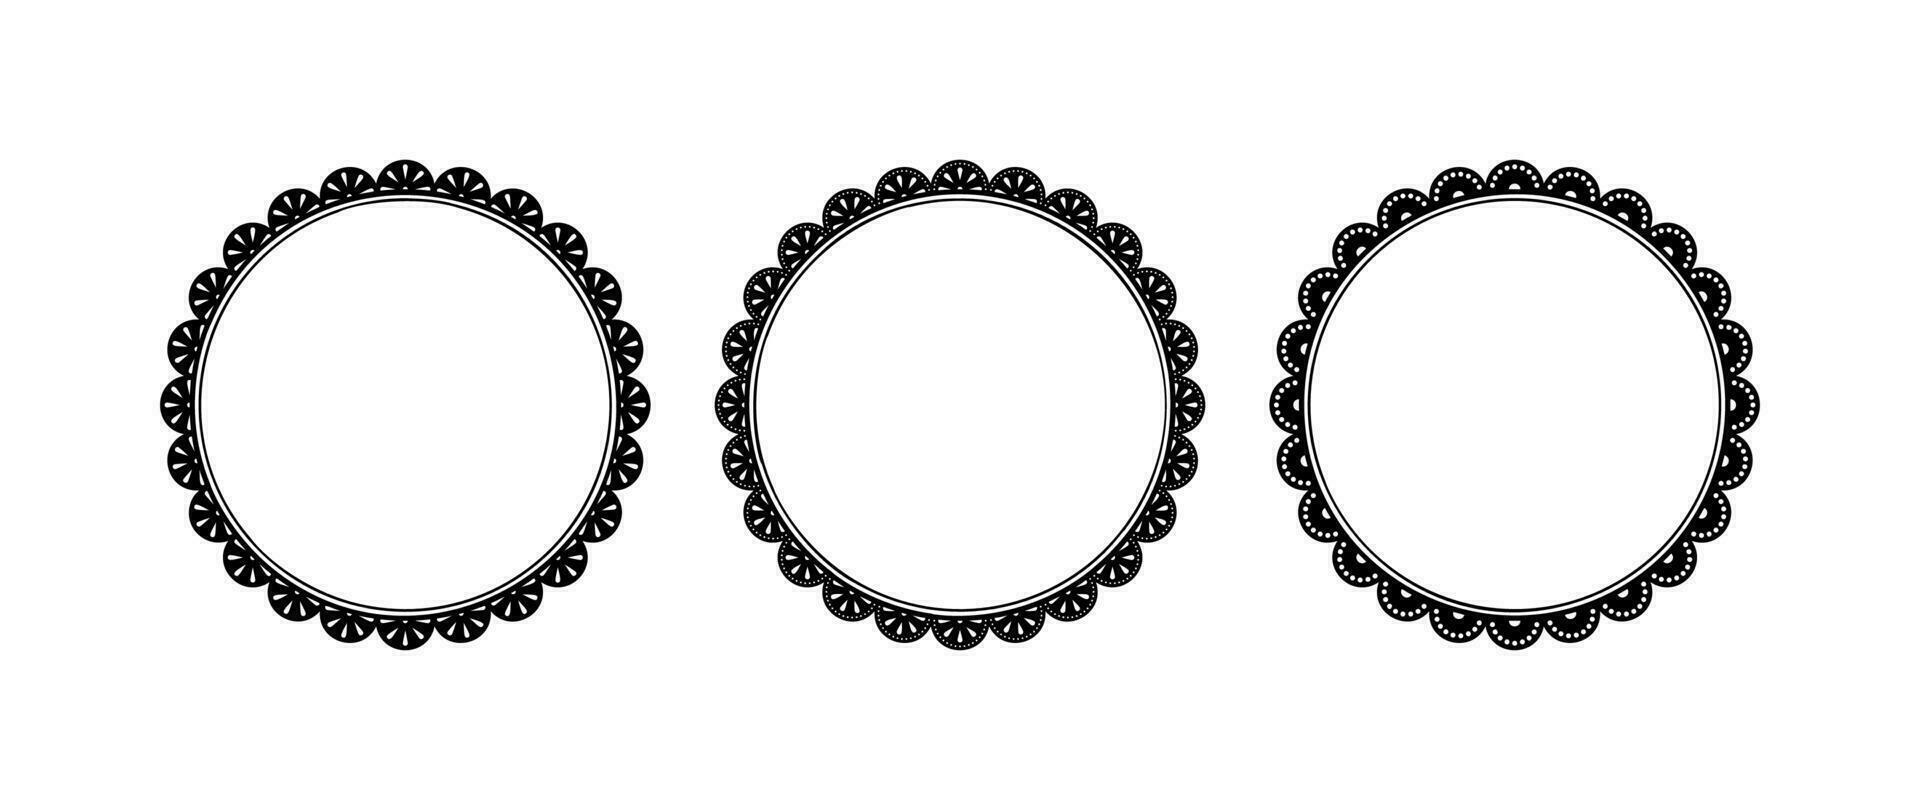 conjunto de decorativo redondo marco frontera ornamento vector clipart